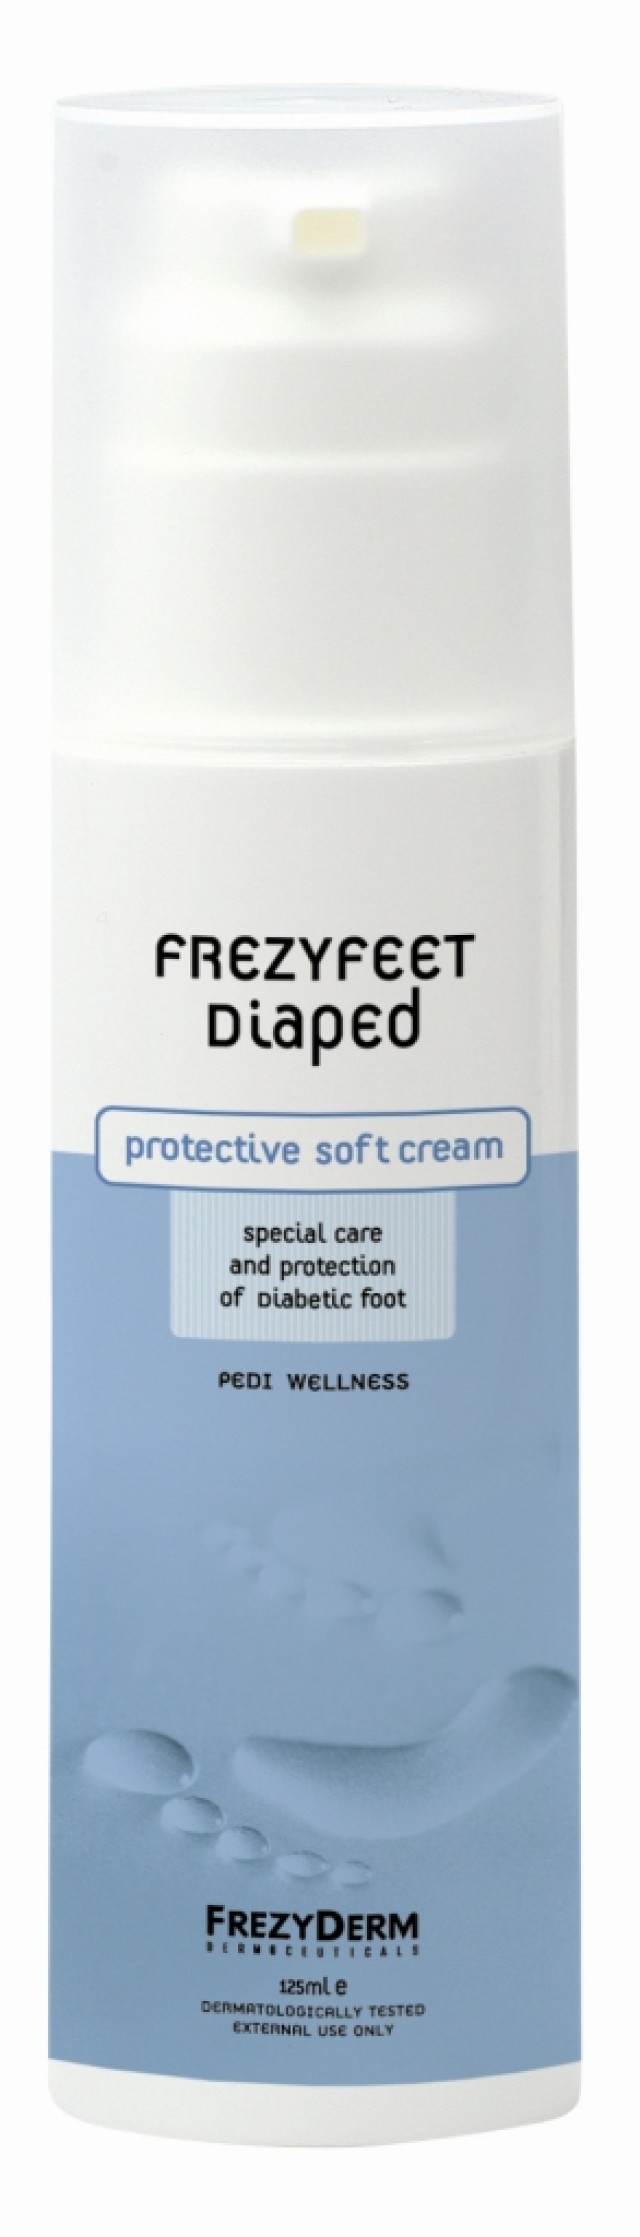 Frezyderm FrezyFeet Diaped Cream Κρέμα Προστασίας και Περιποίησης για το Διαβητικό Πόδι 125ml